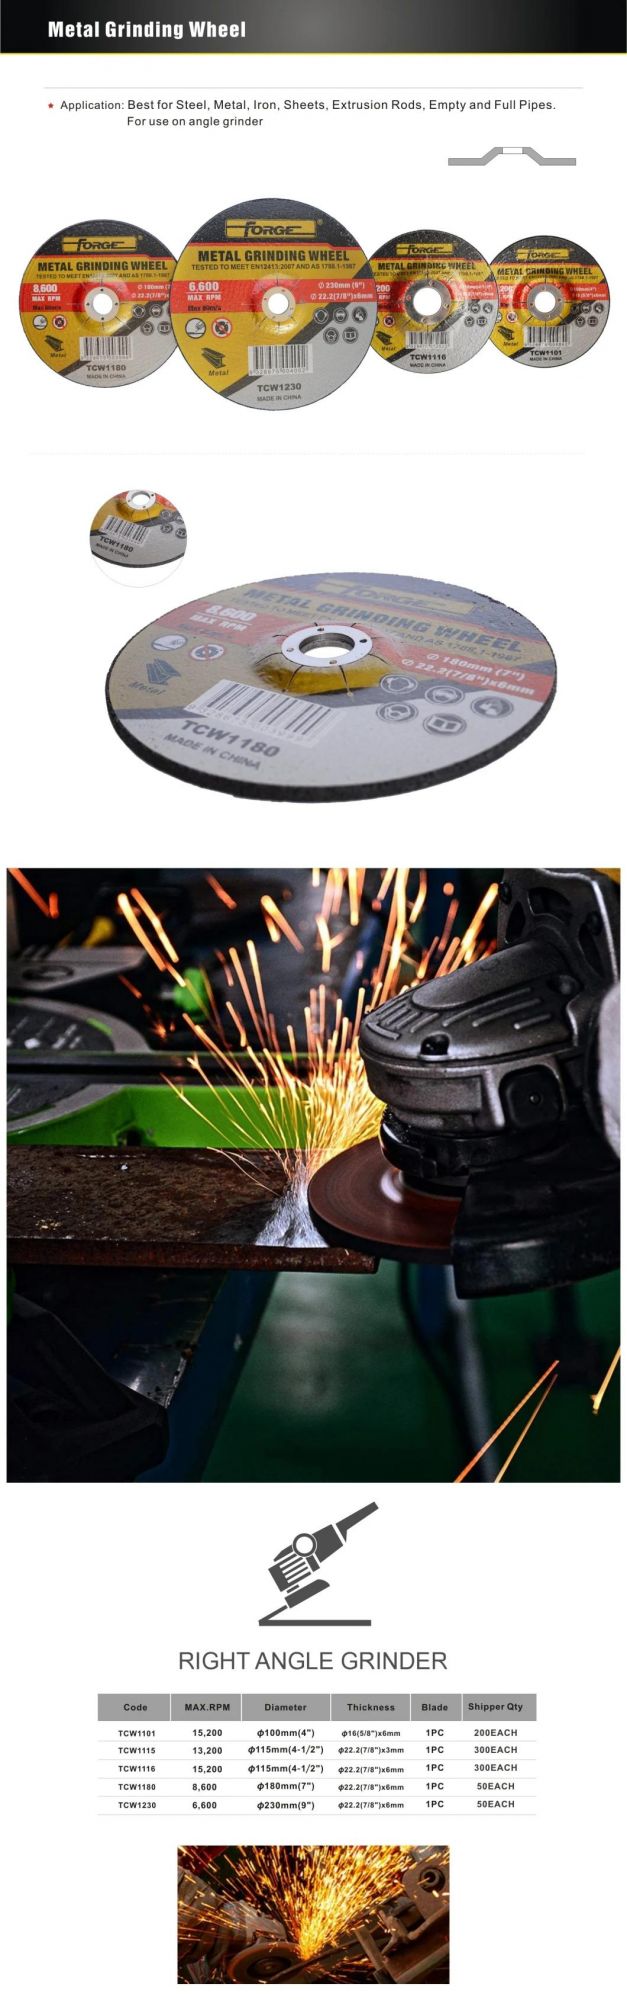 230*6*22.2mm Depressed Center Metal Abrasive Disc Grinding Wheel